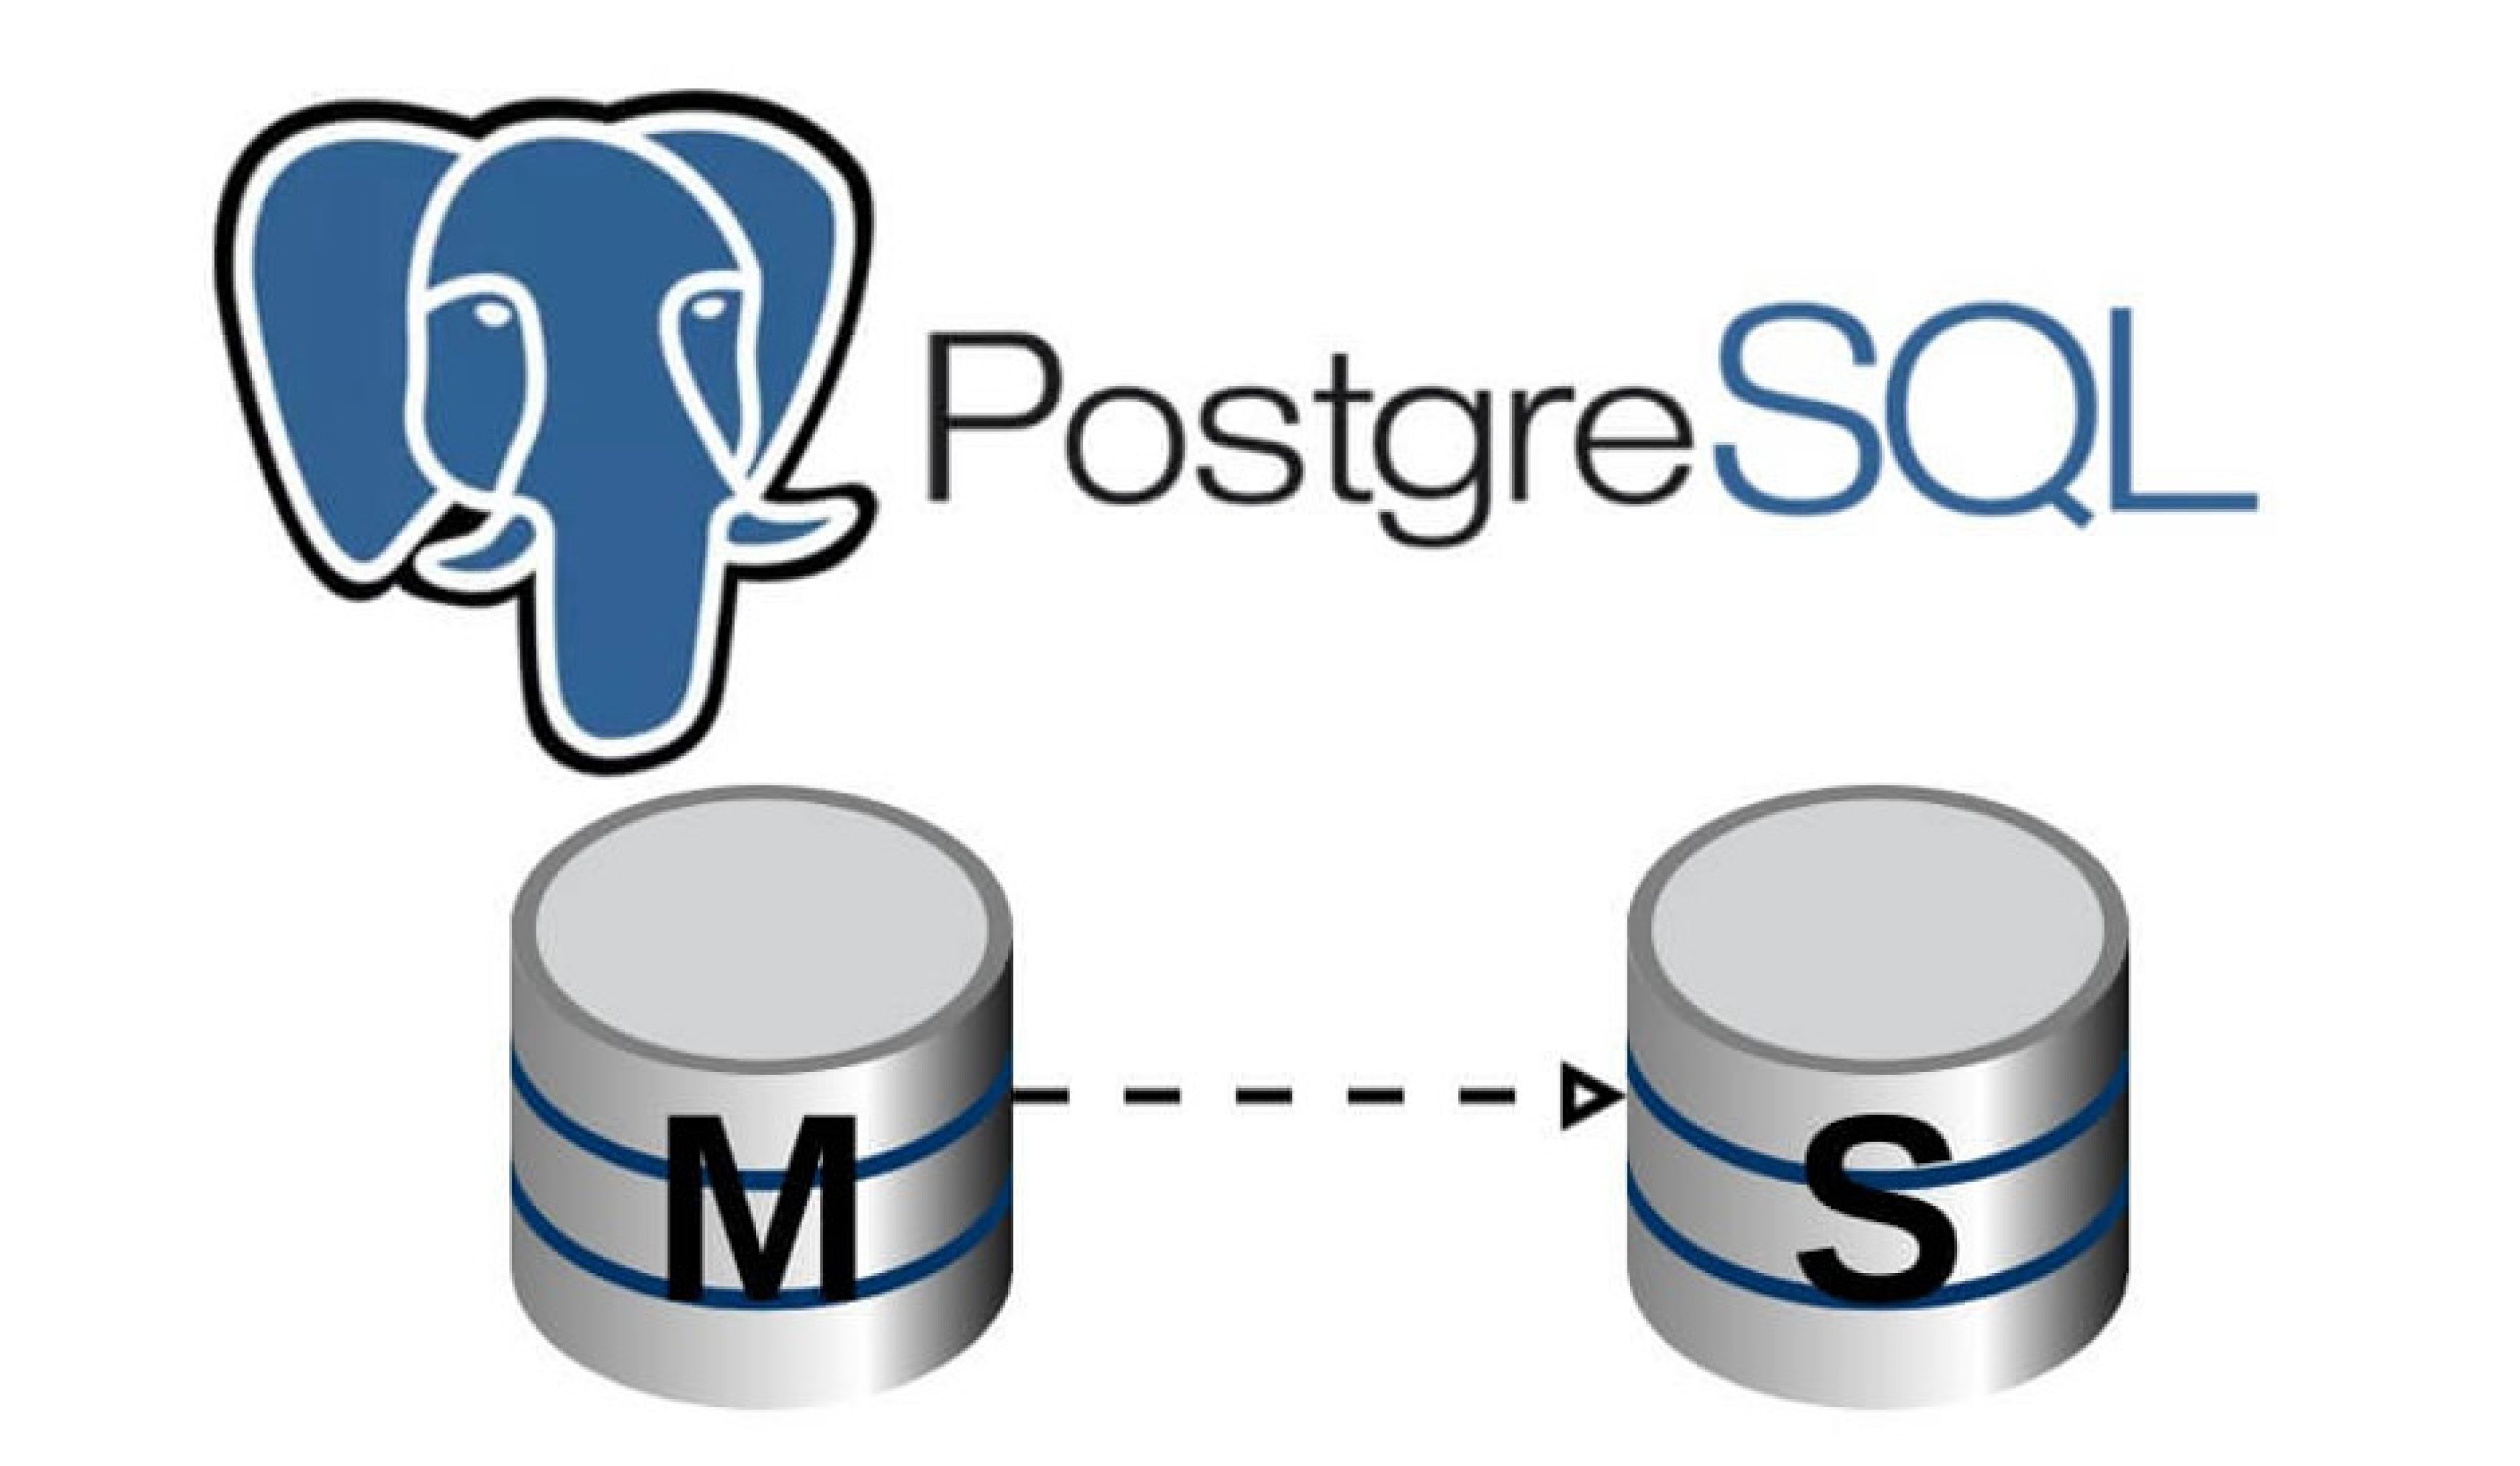 Temp postgresql. POSTGRESQL картинки. Постгрес SQL. СУБД POSTGRESQL. POSTGRESQL 14.